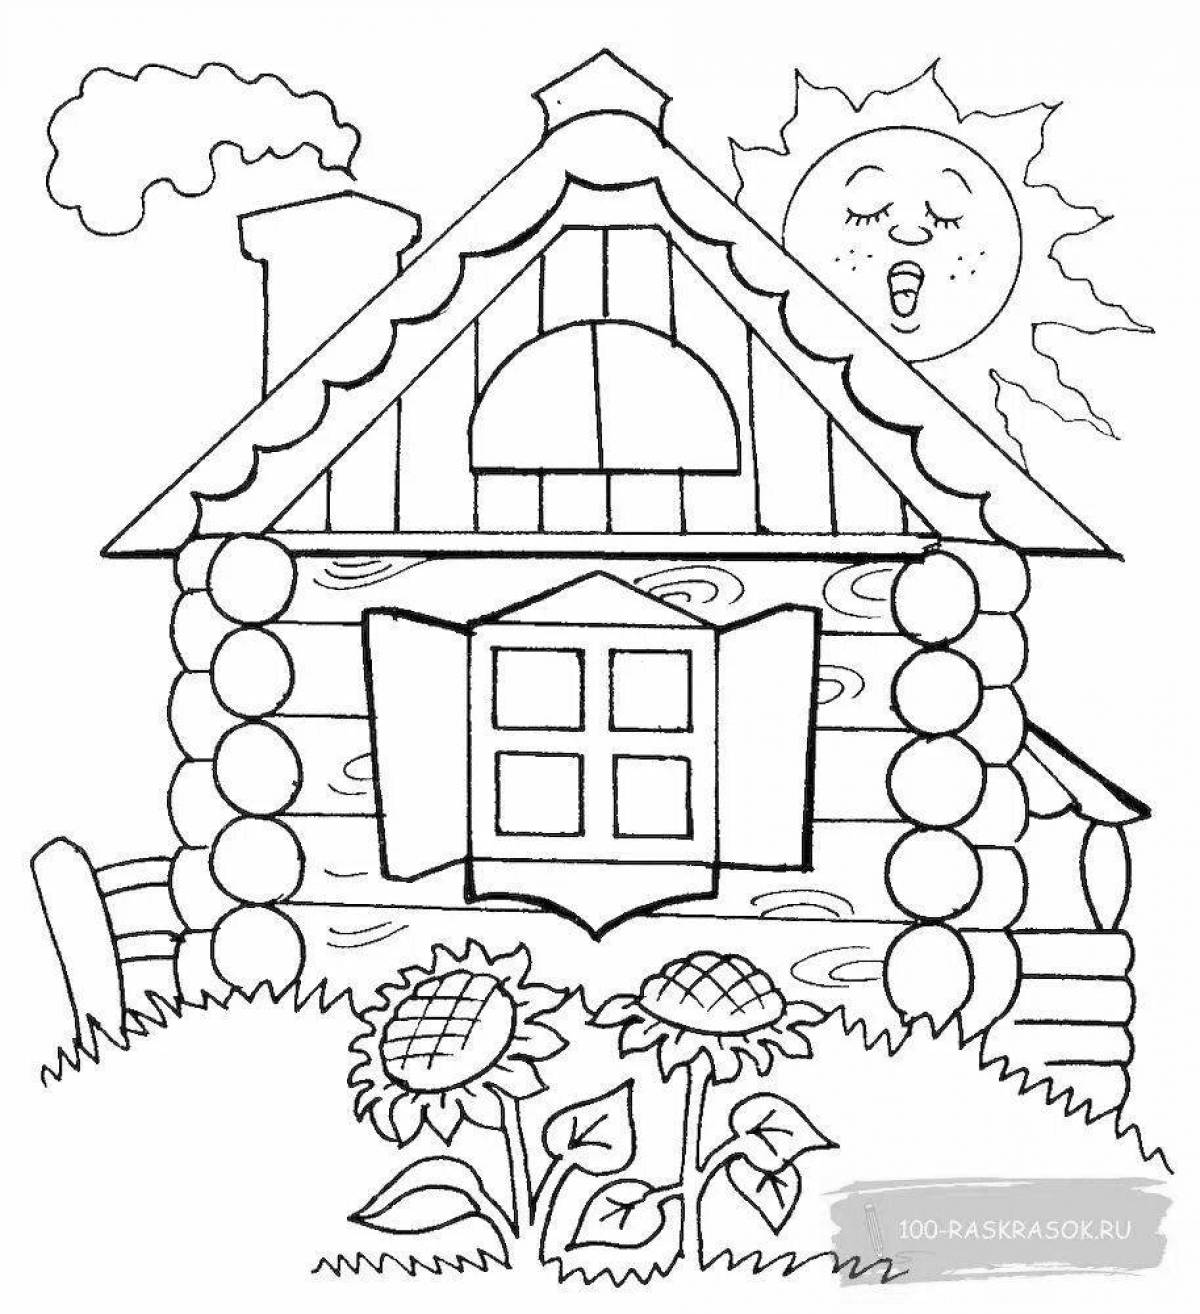 Colorific village house coloring pages for kids